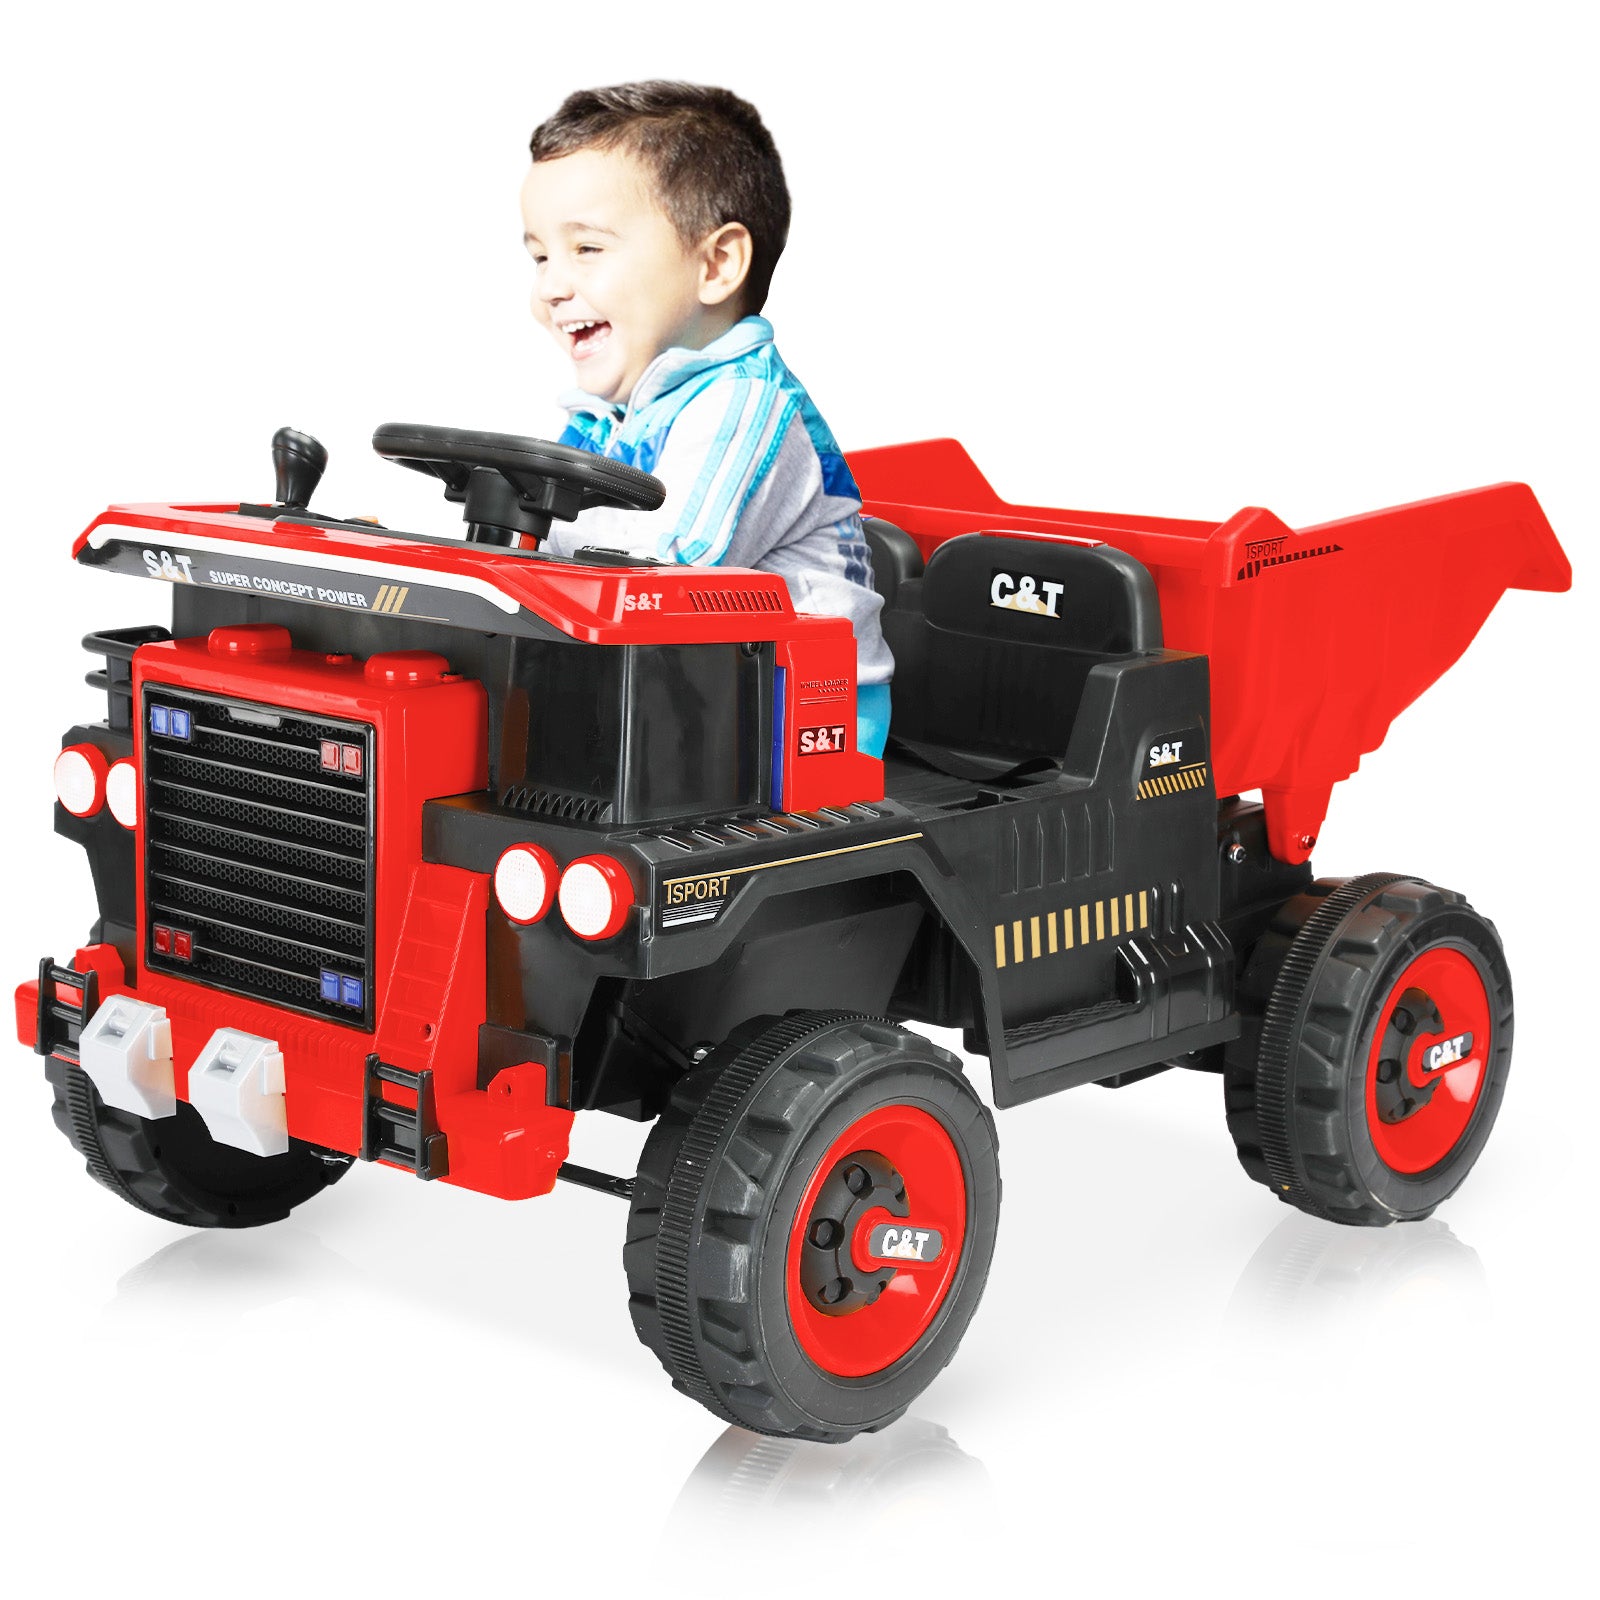 XJD 12V Kids Ride On Truck Car w/Parent Remote Control, Spring Suspension, LED Lights, USB Port, Bluetooth